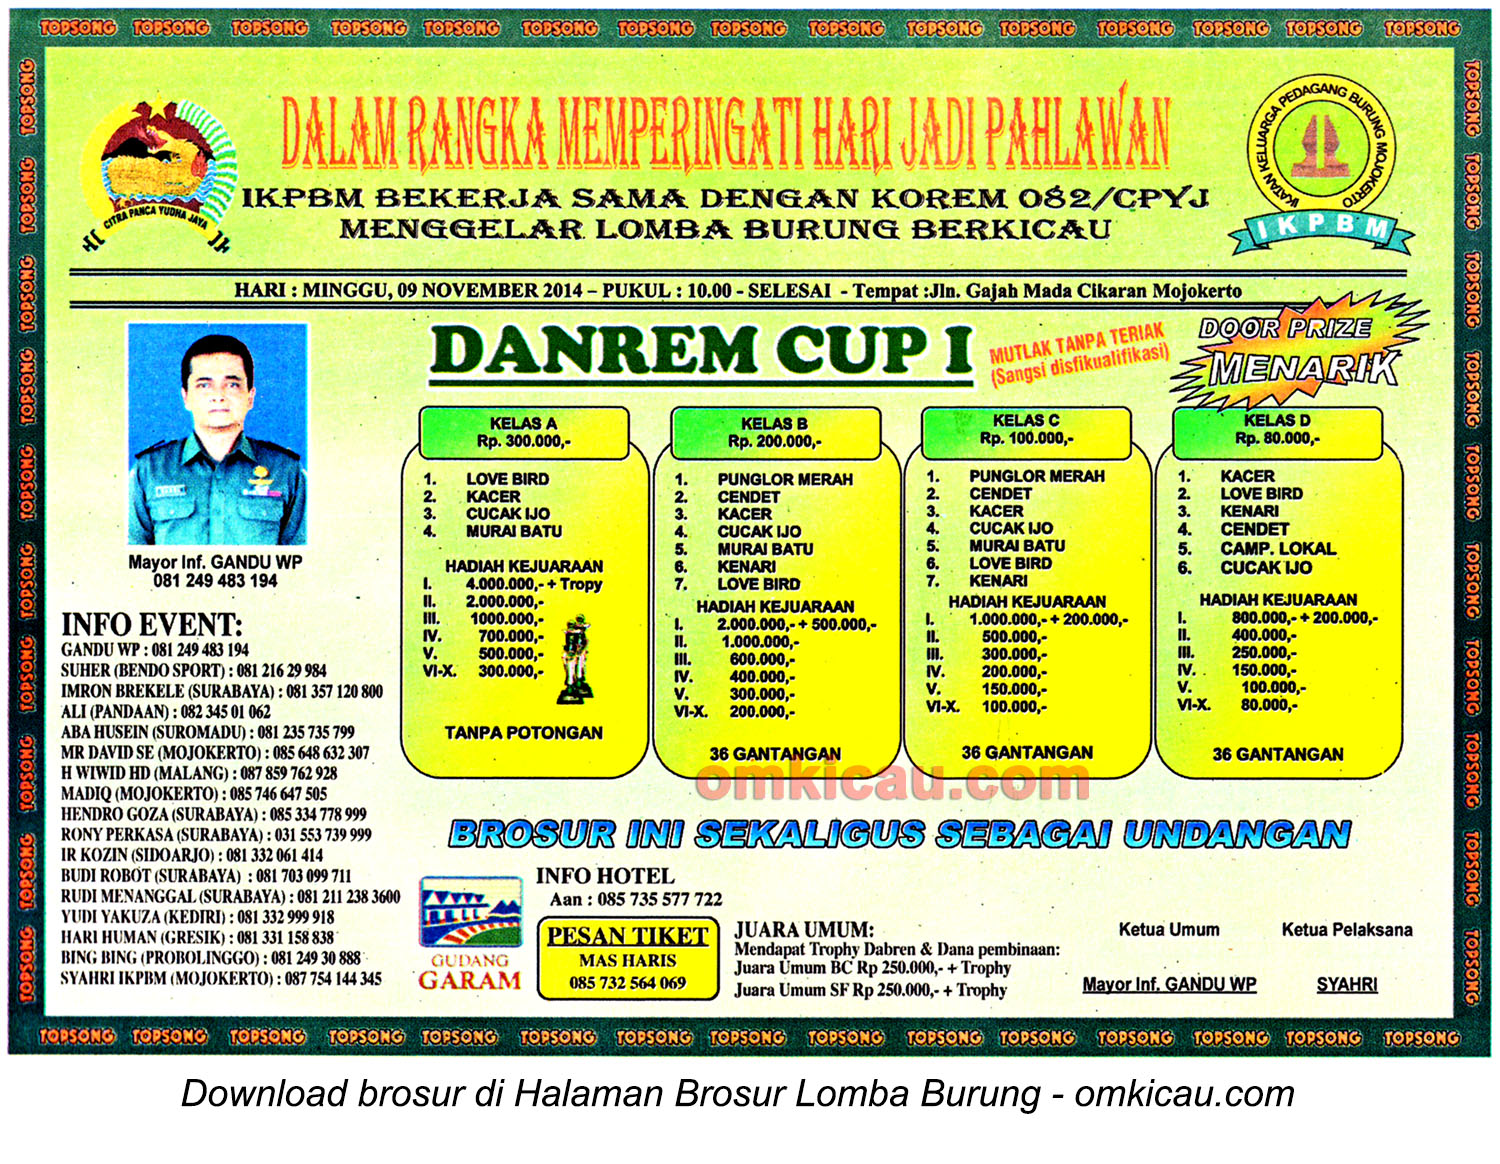 Brosur Lomba Burung Berkicau Danrem Cup I, Mojokerto, 9 November 2014